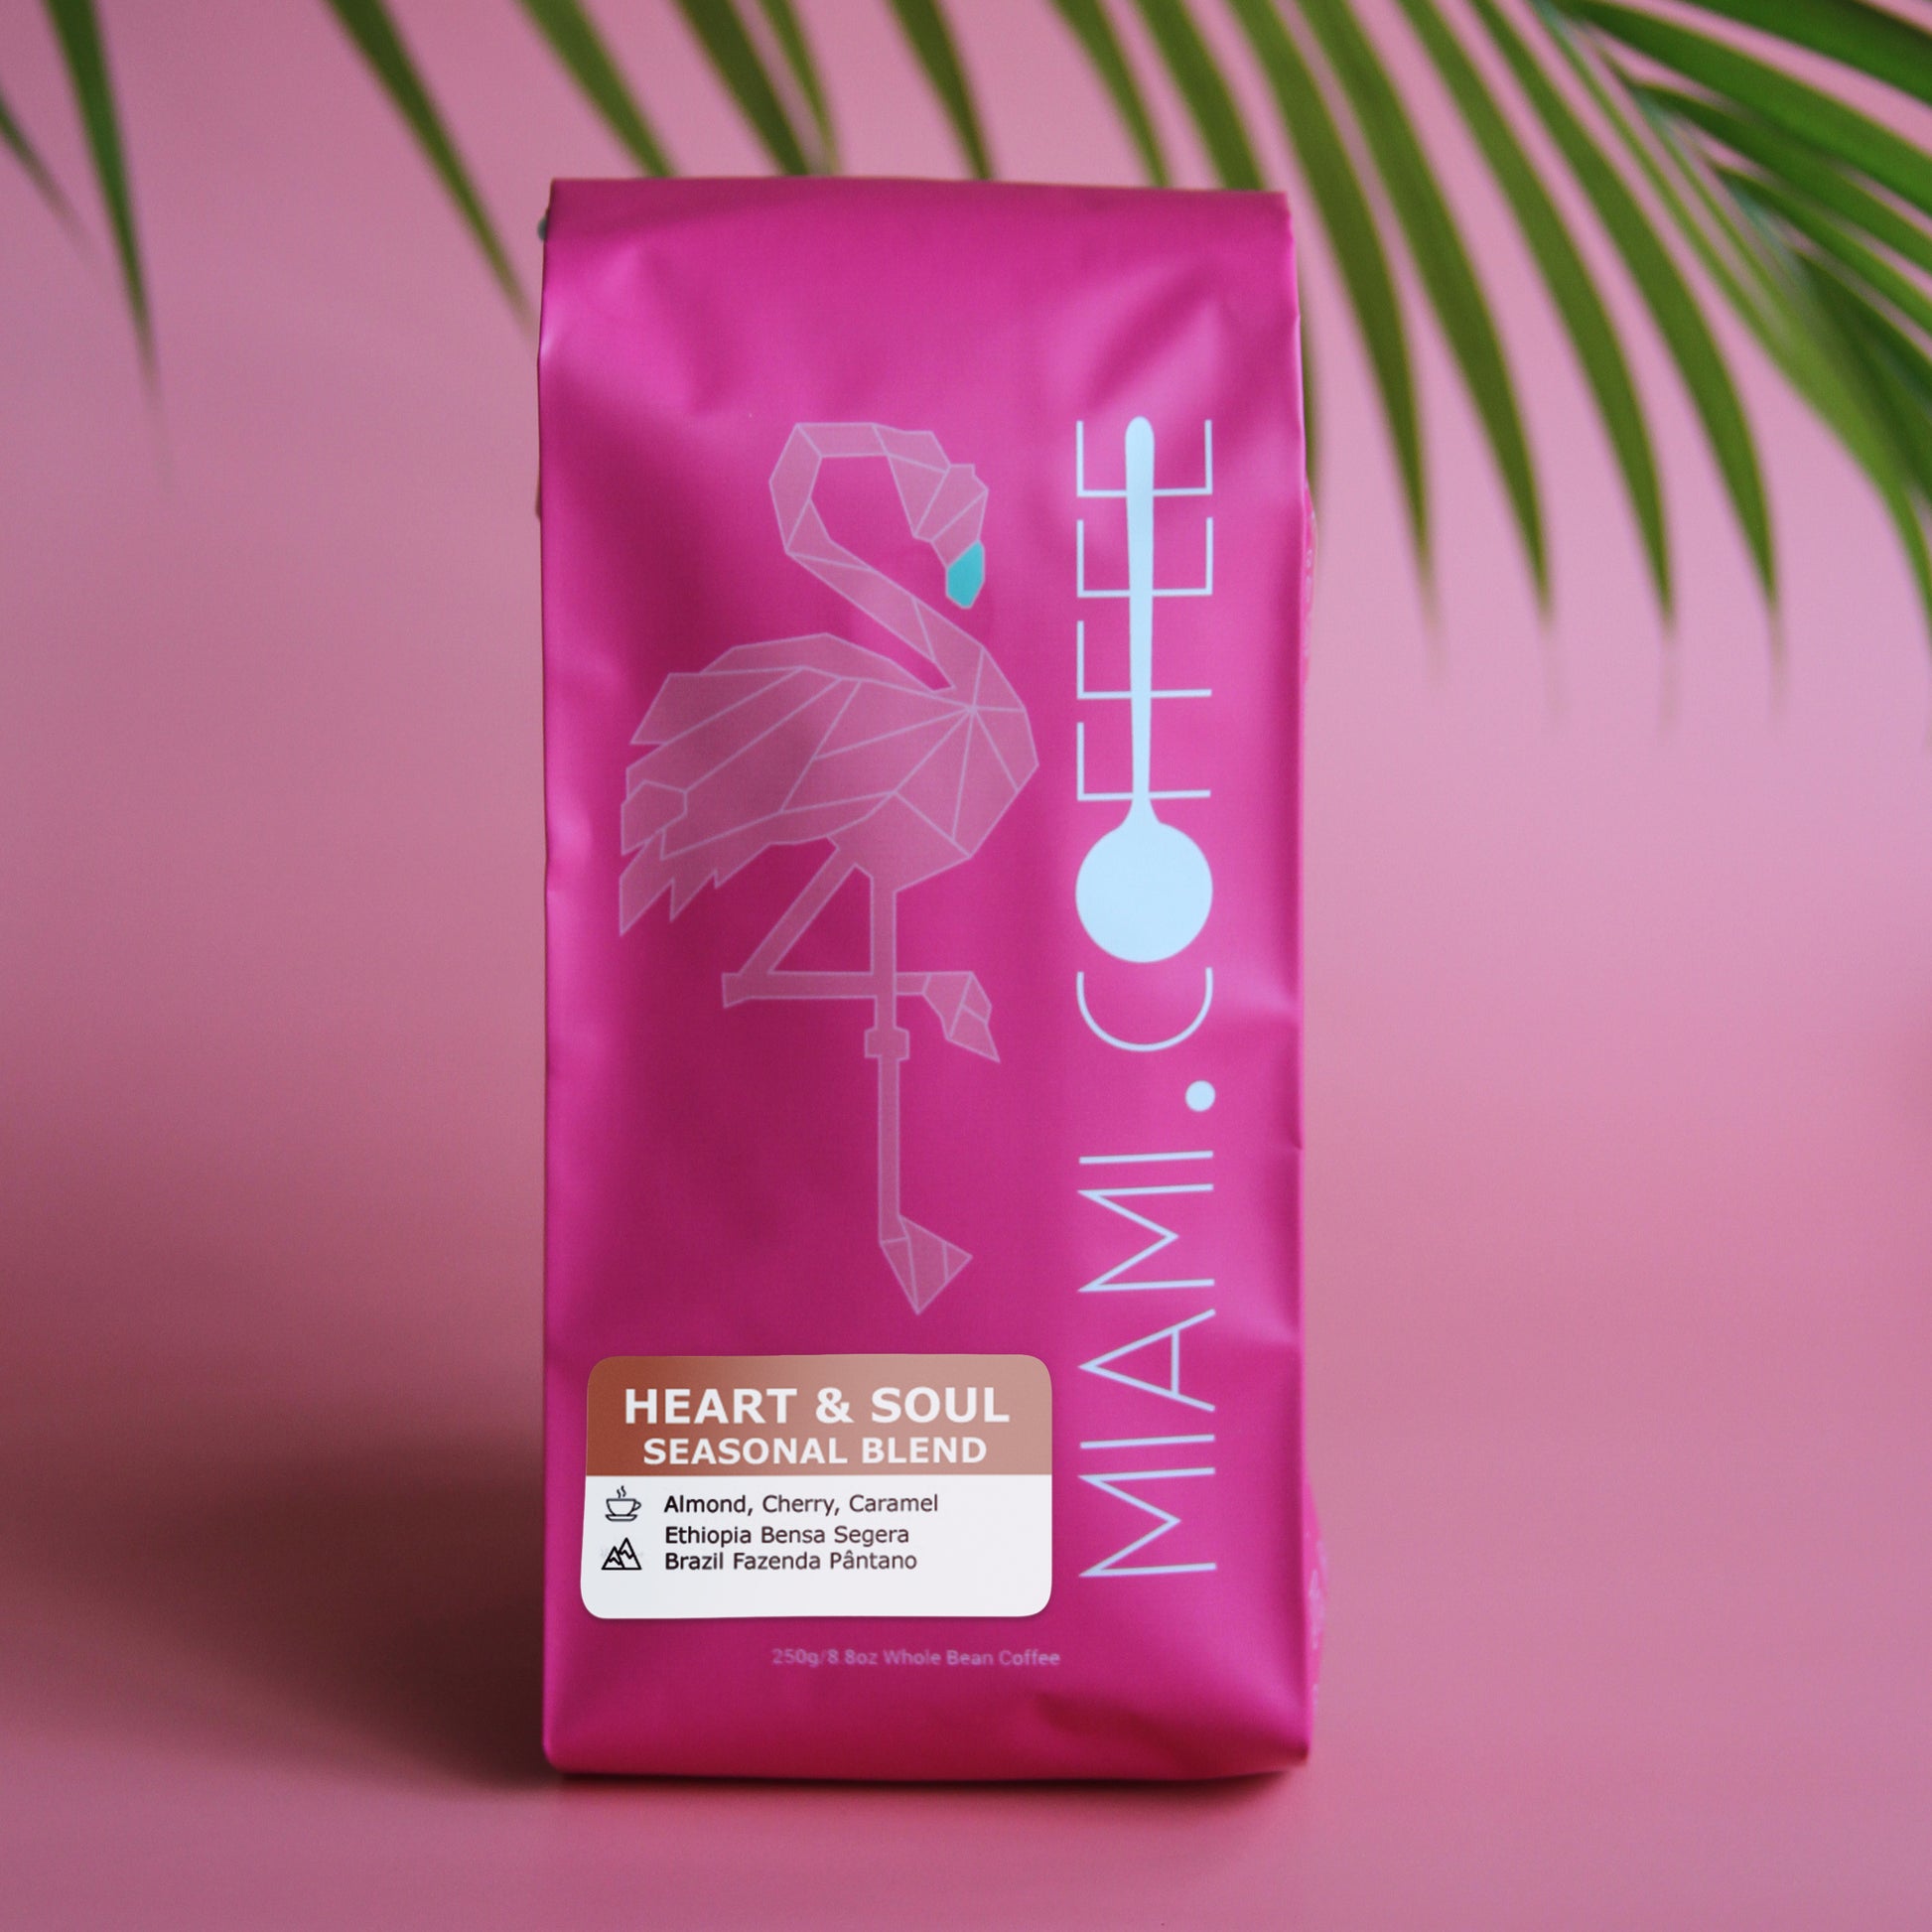 Miami (dot) Coffee Heart & Soul Seasonal Blend 9oz bag. Origins: Ethiopia Bensa Segera and Brazil Fazenda Pântano. Flavor Descriptors: Almond, Cherry, Caramel